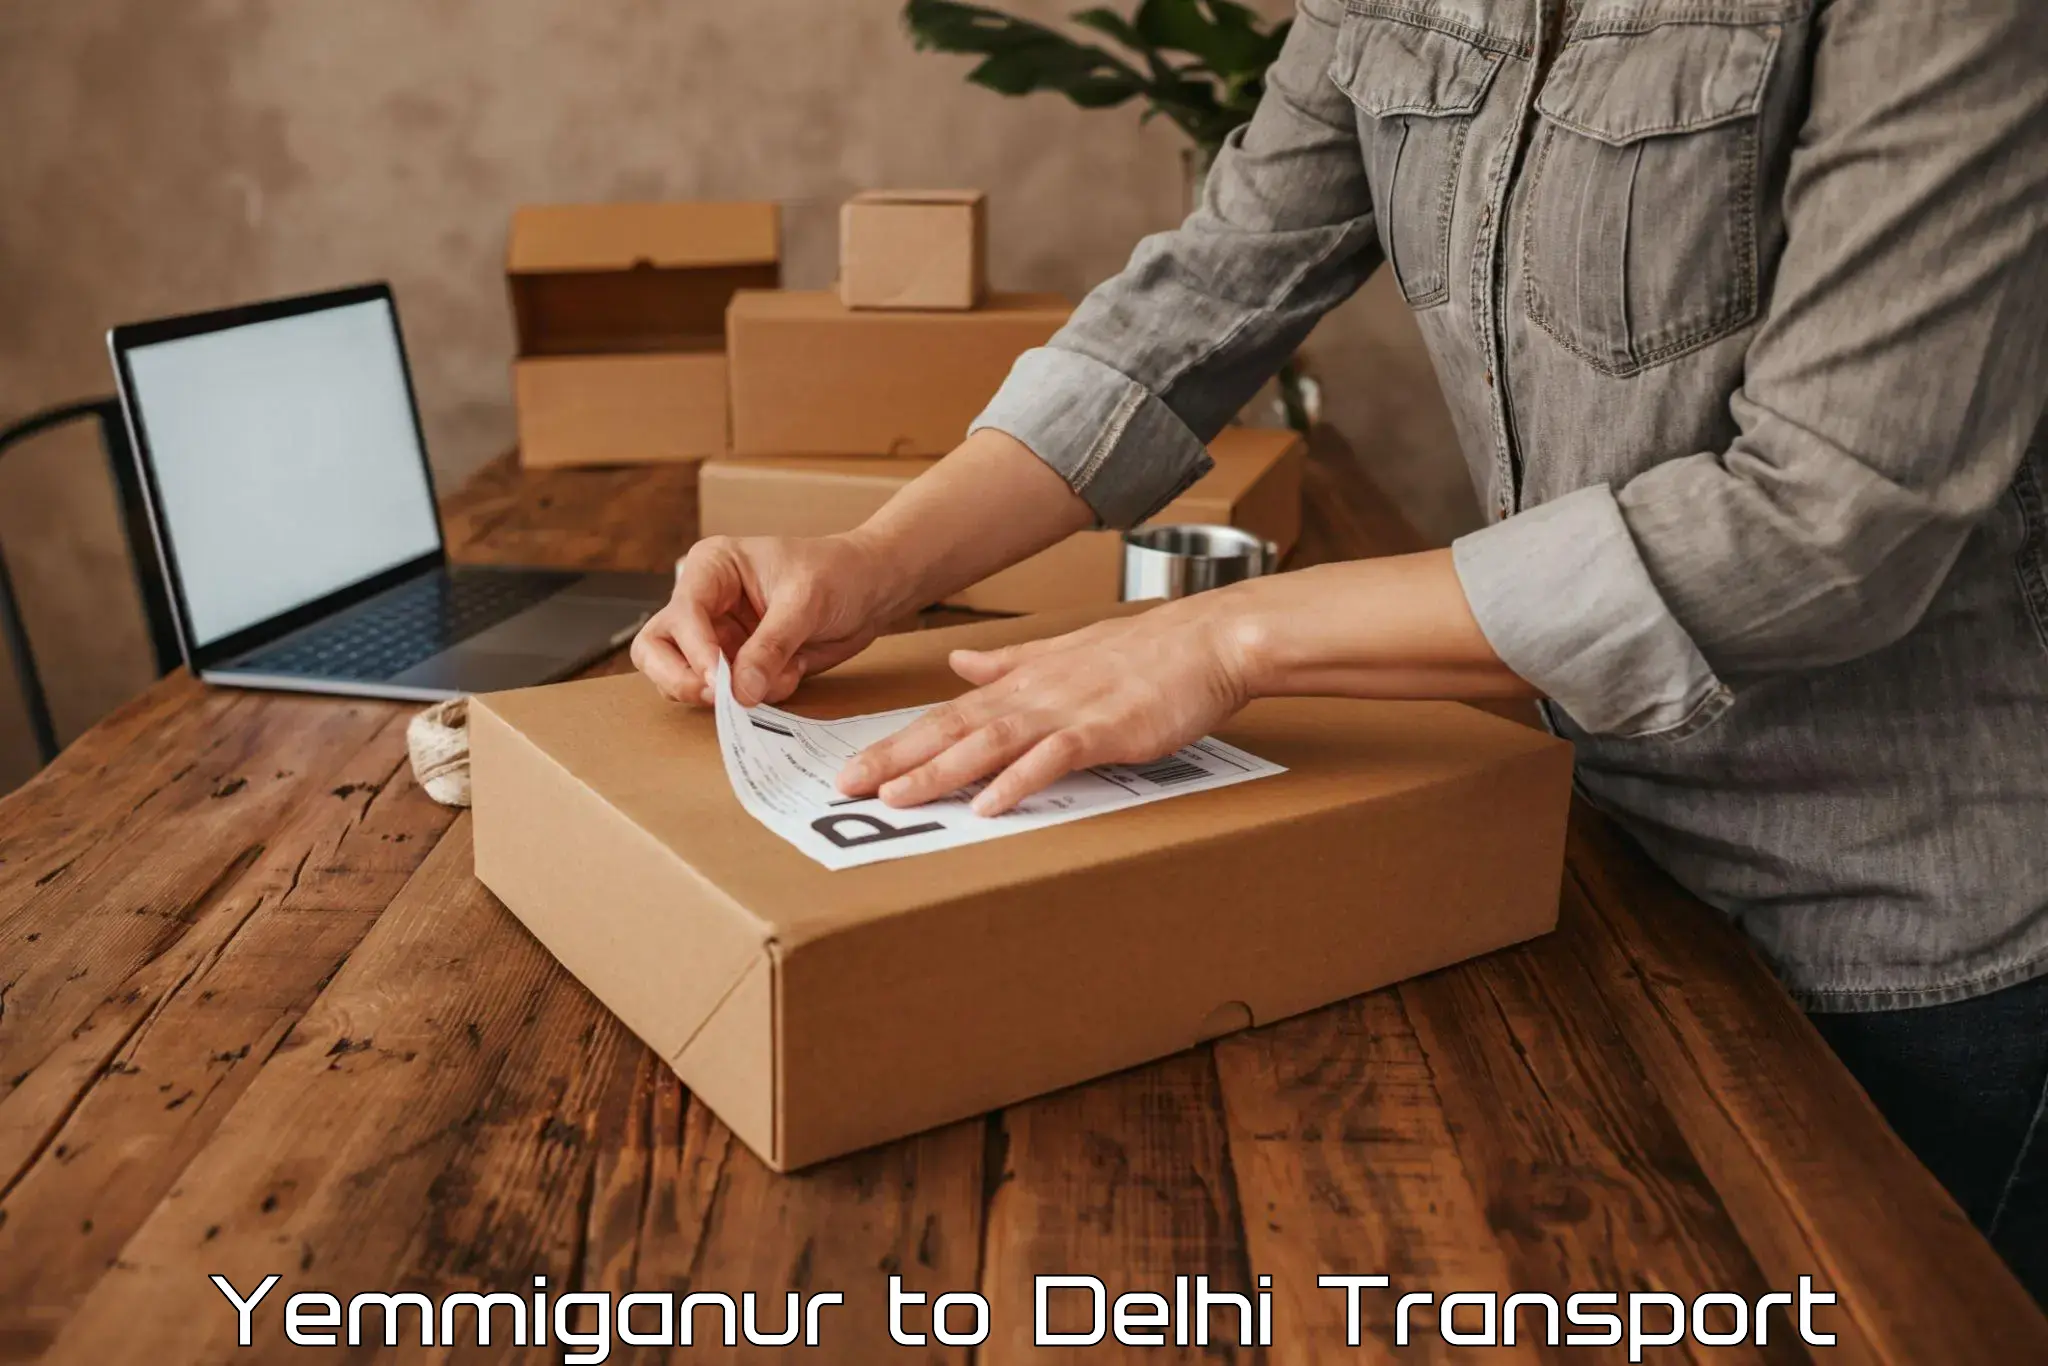 Delivery service Yemmiganur to Delhi